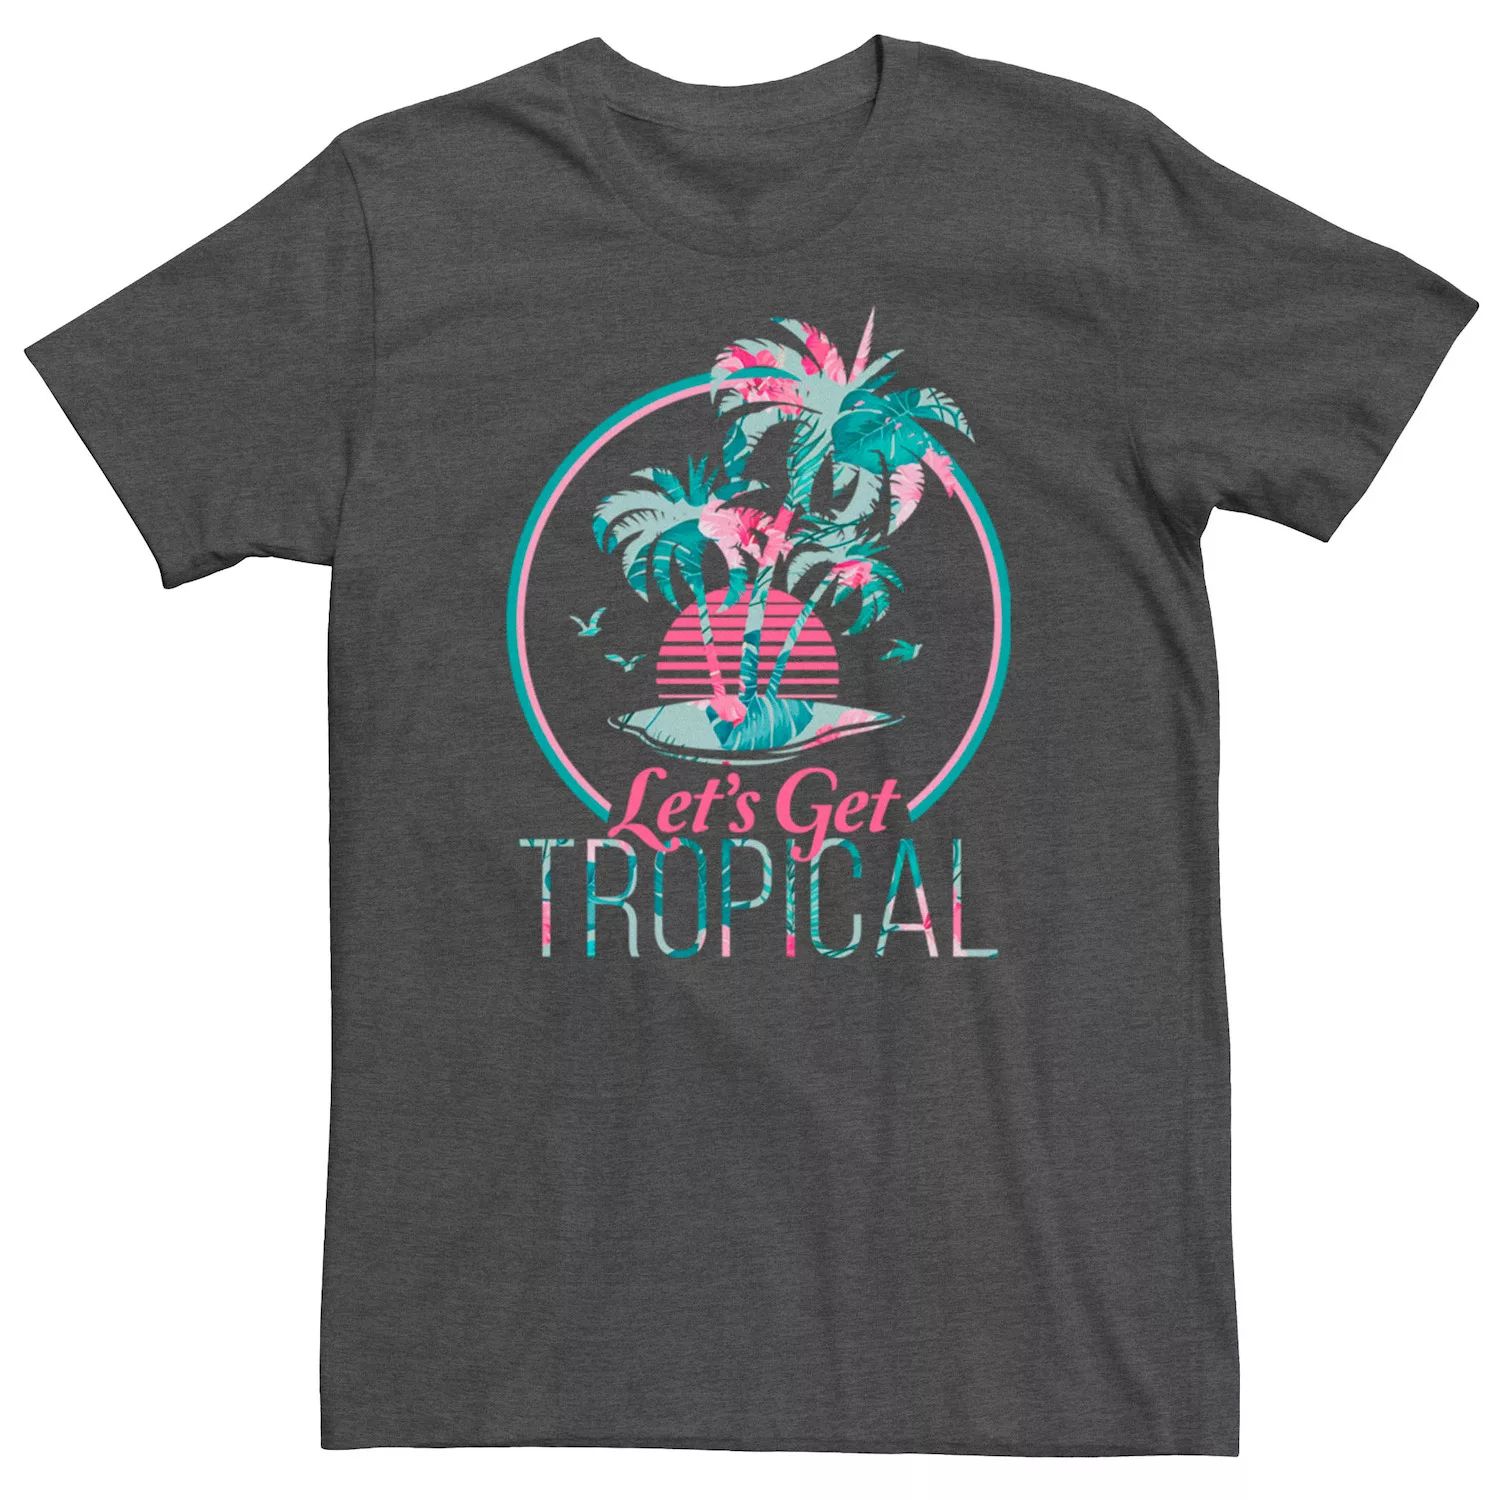 Мужская футболка Lets Get Tropical Island с цветочным наполнением Licensed Character